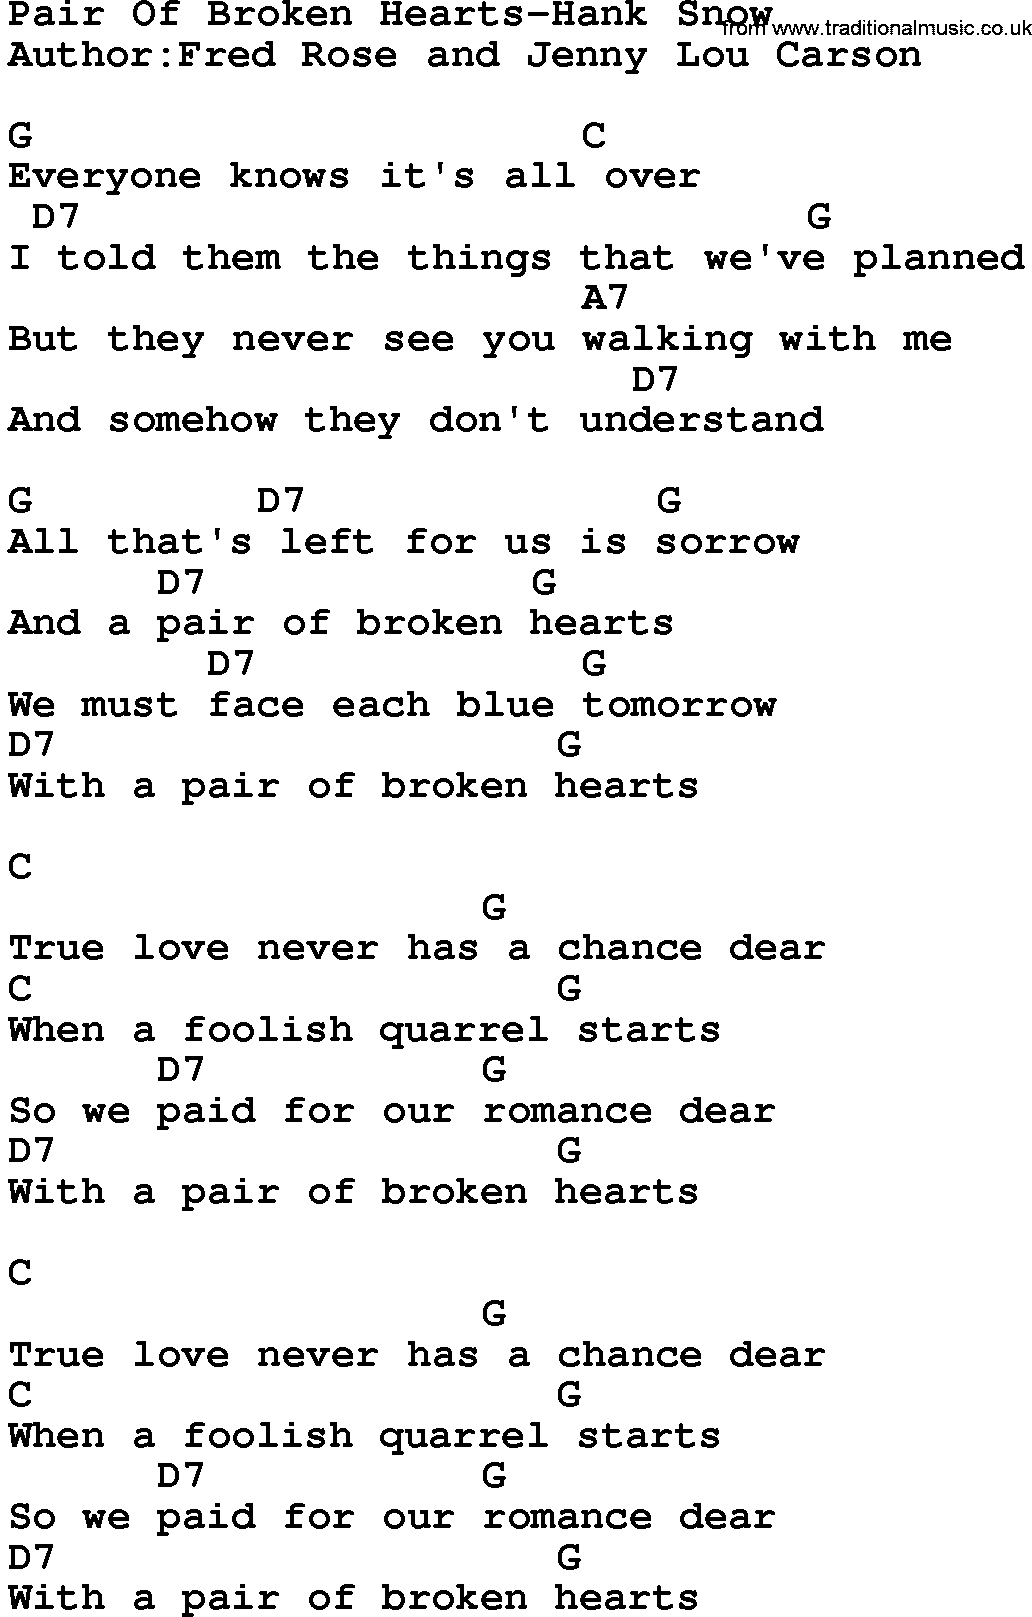 Country music song: Pair Of Broken Hearts-Hank Snow lyrics and chords